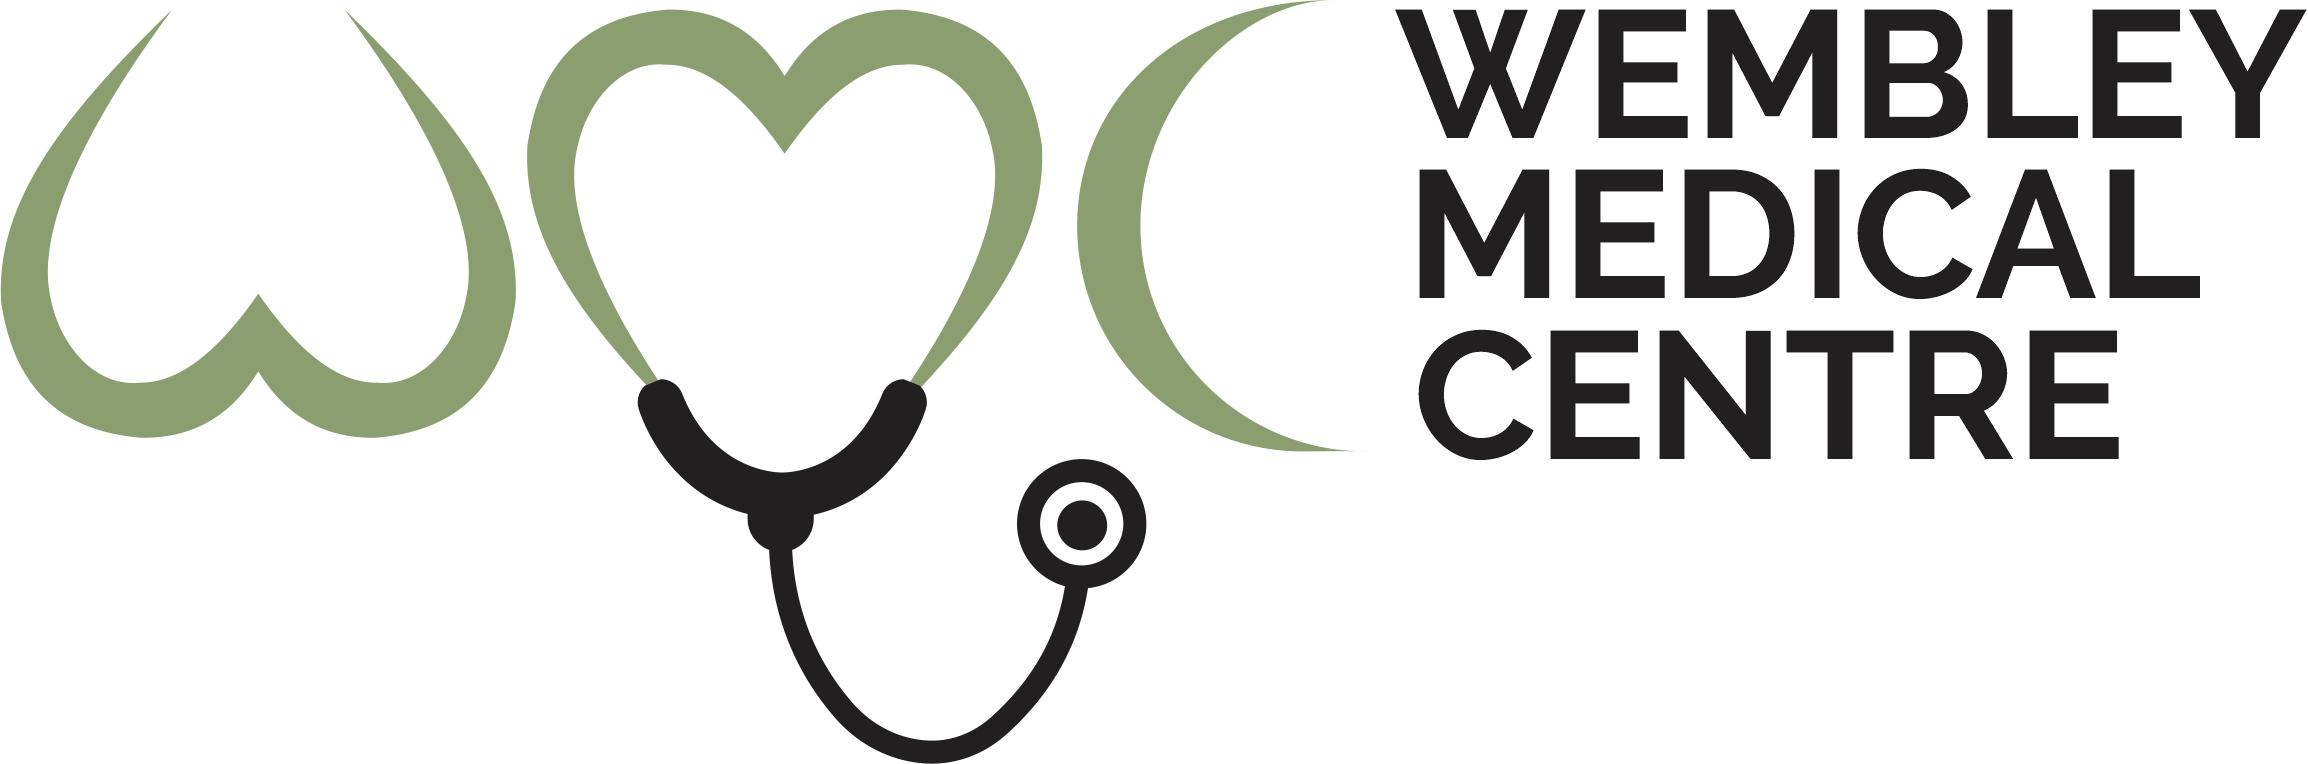 wmc logo